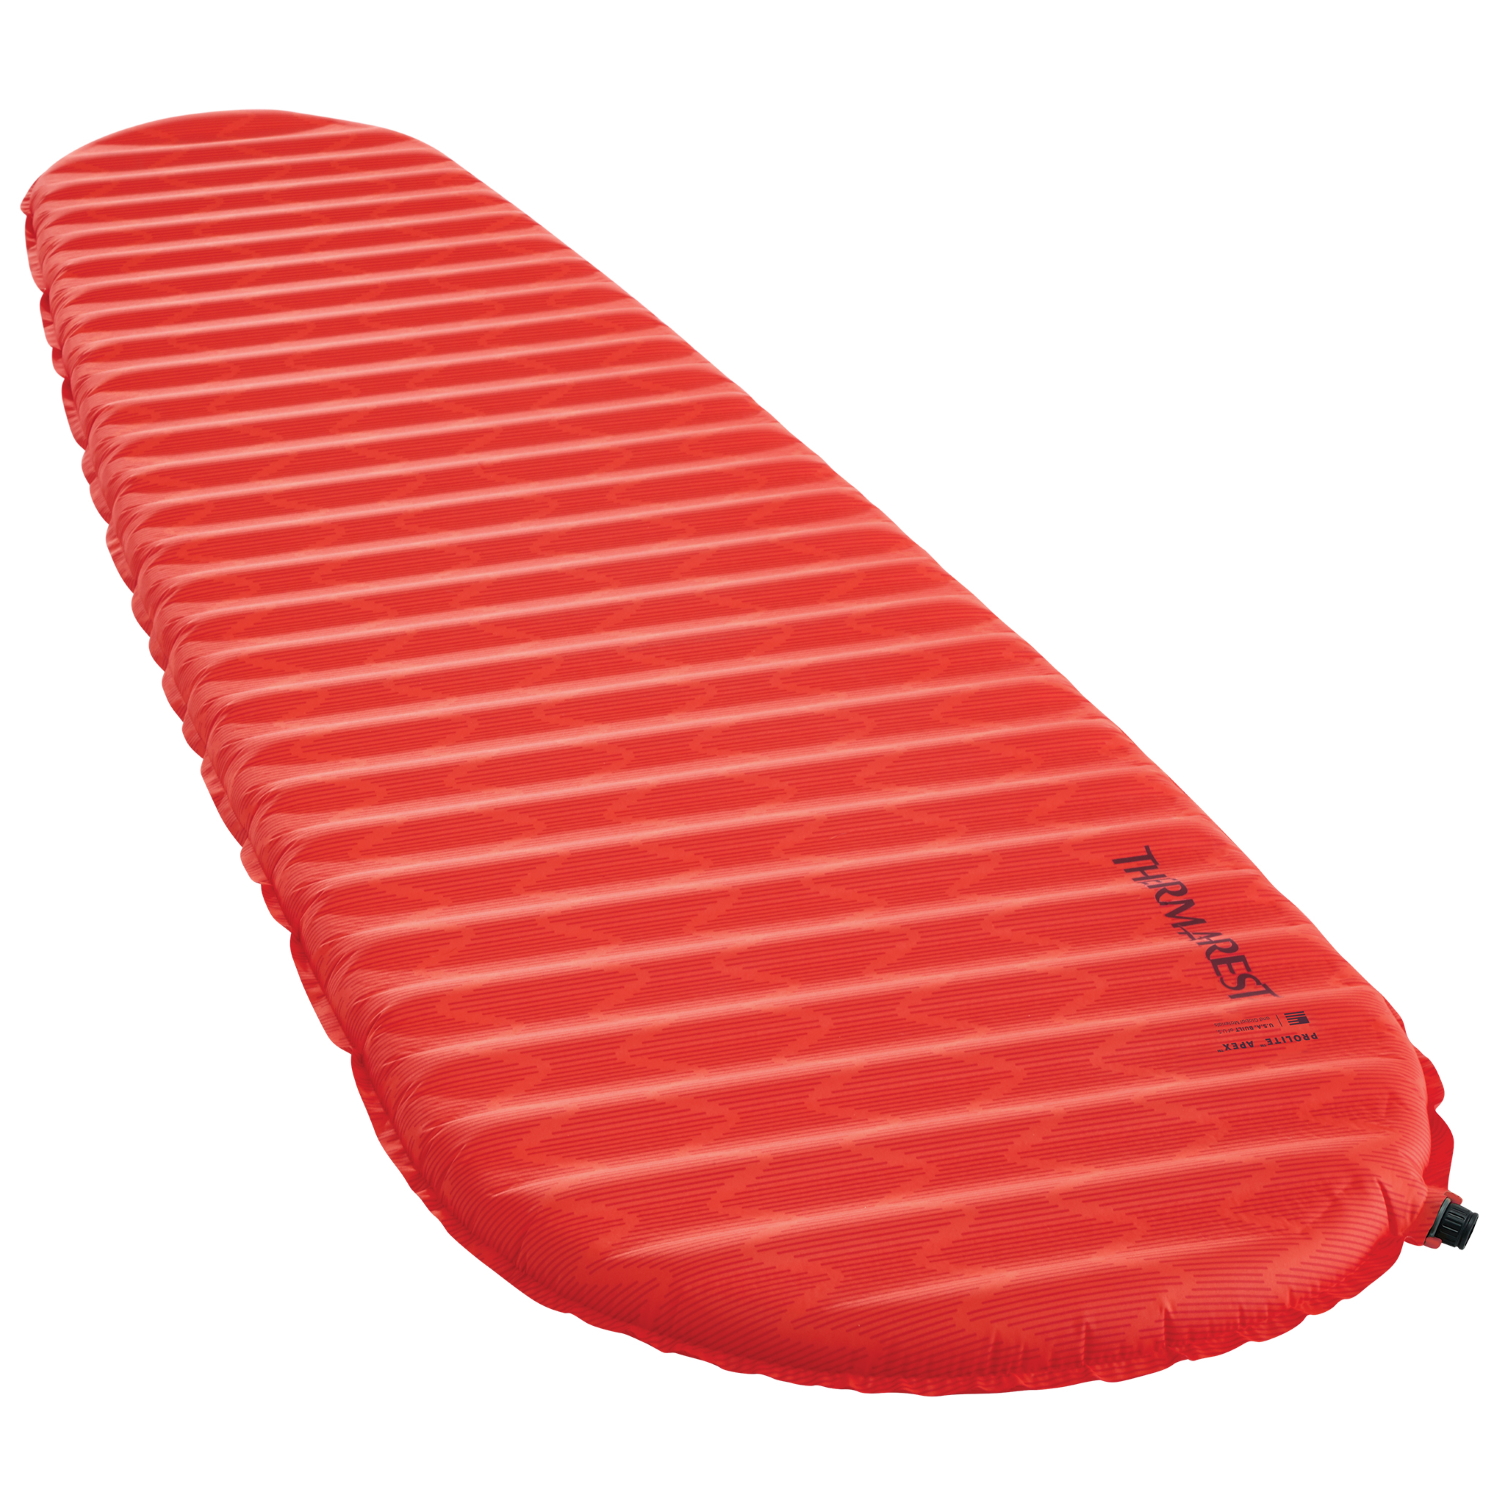 Image of Therm-a-Rest ProLite Apex Mattress Sleeping Pad - Regular - Heat Wave